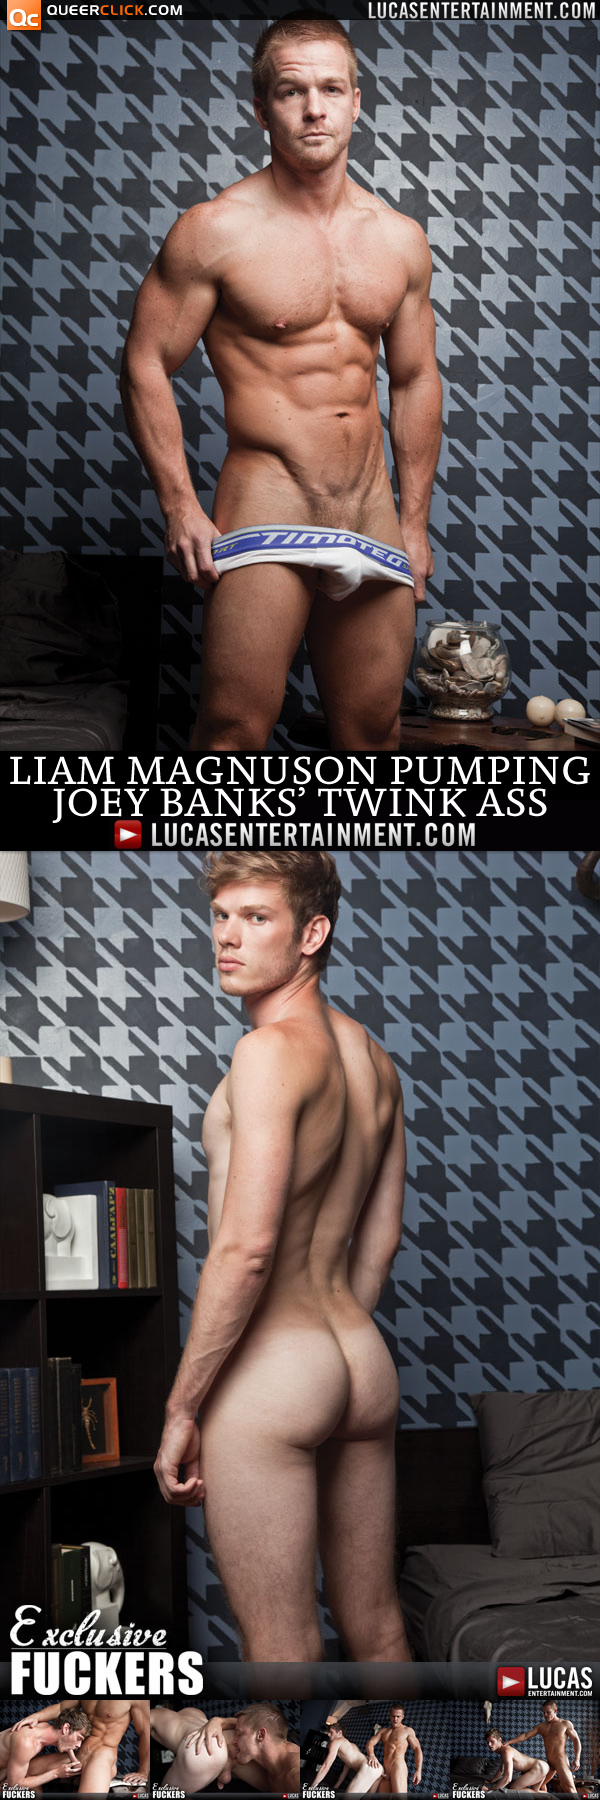 Lucas Entertainment LIAM MAGNUSON GETS A WORKOUT PUMPING JOEY BANKS' TWINK ASS